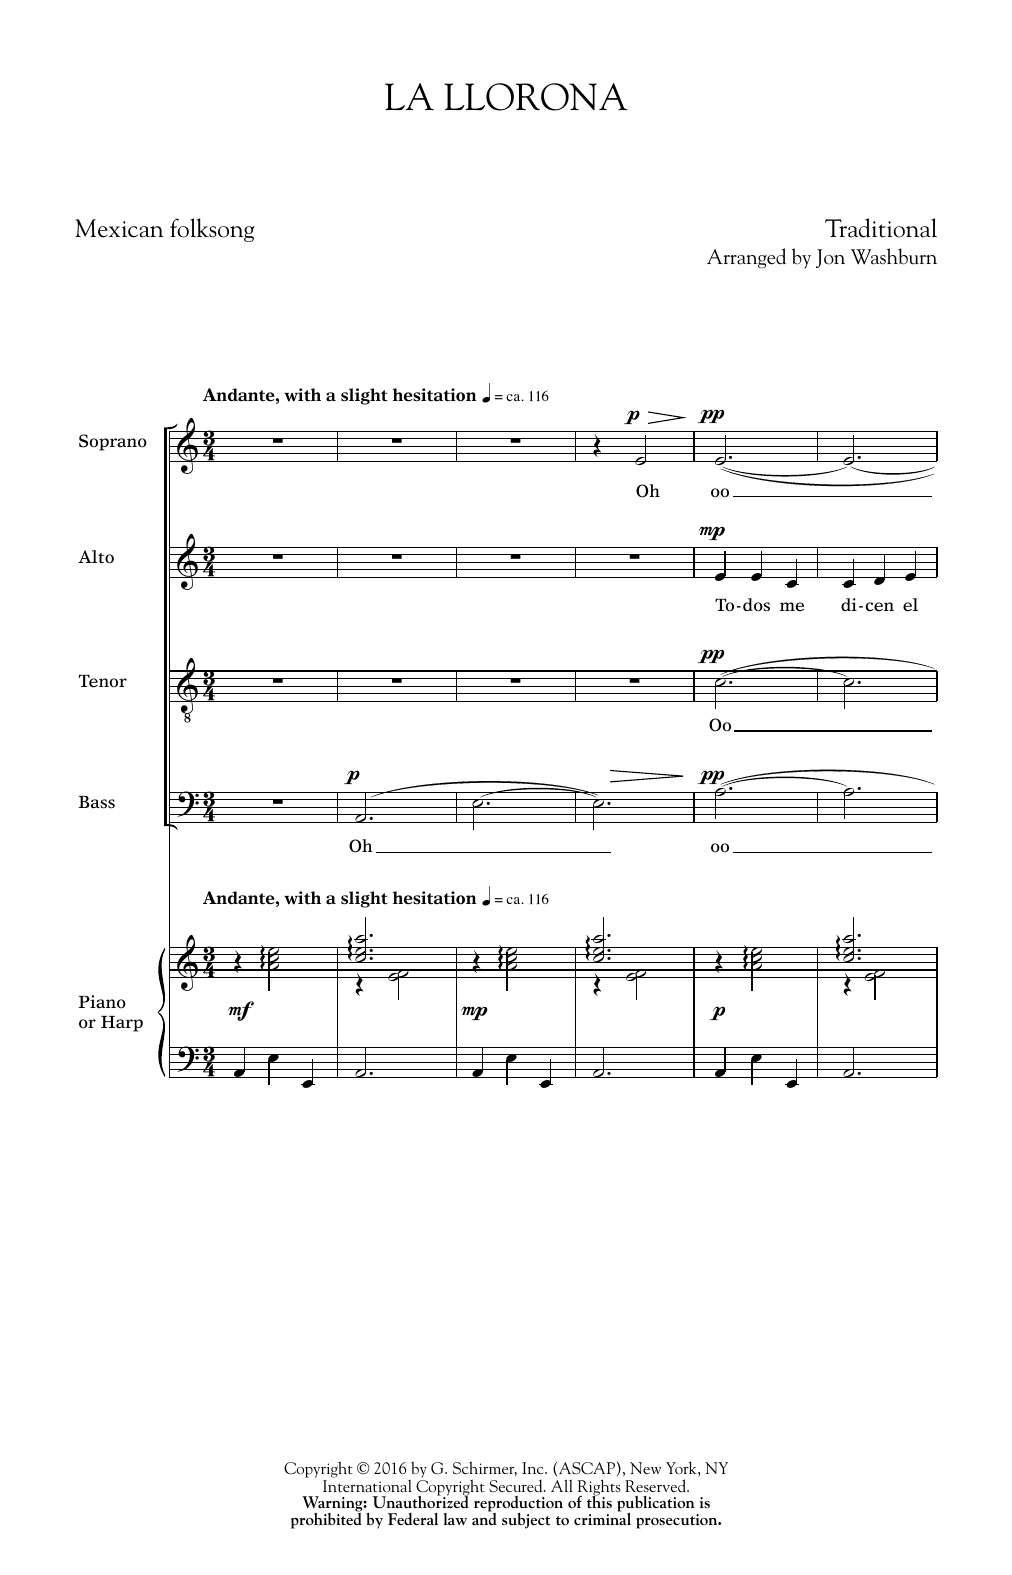 Mexican Folksong La Llorona (arr. Jon Washburn) Sheet Music Notes & Chords for SATB - Download or Print PDF